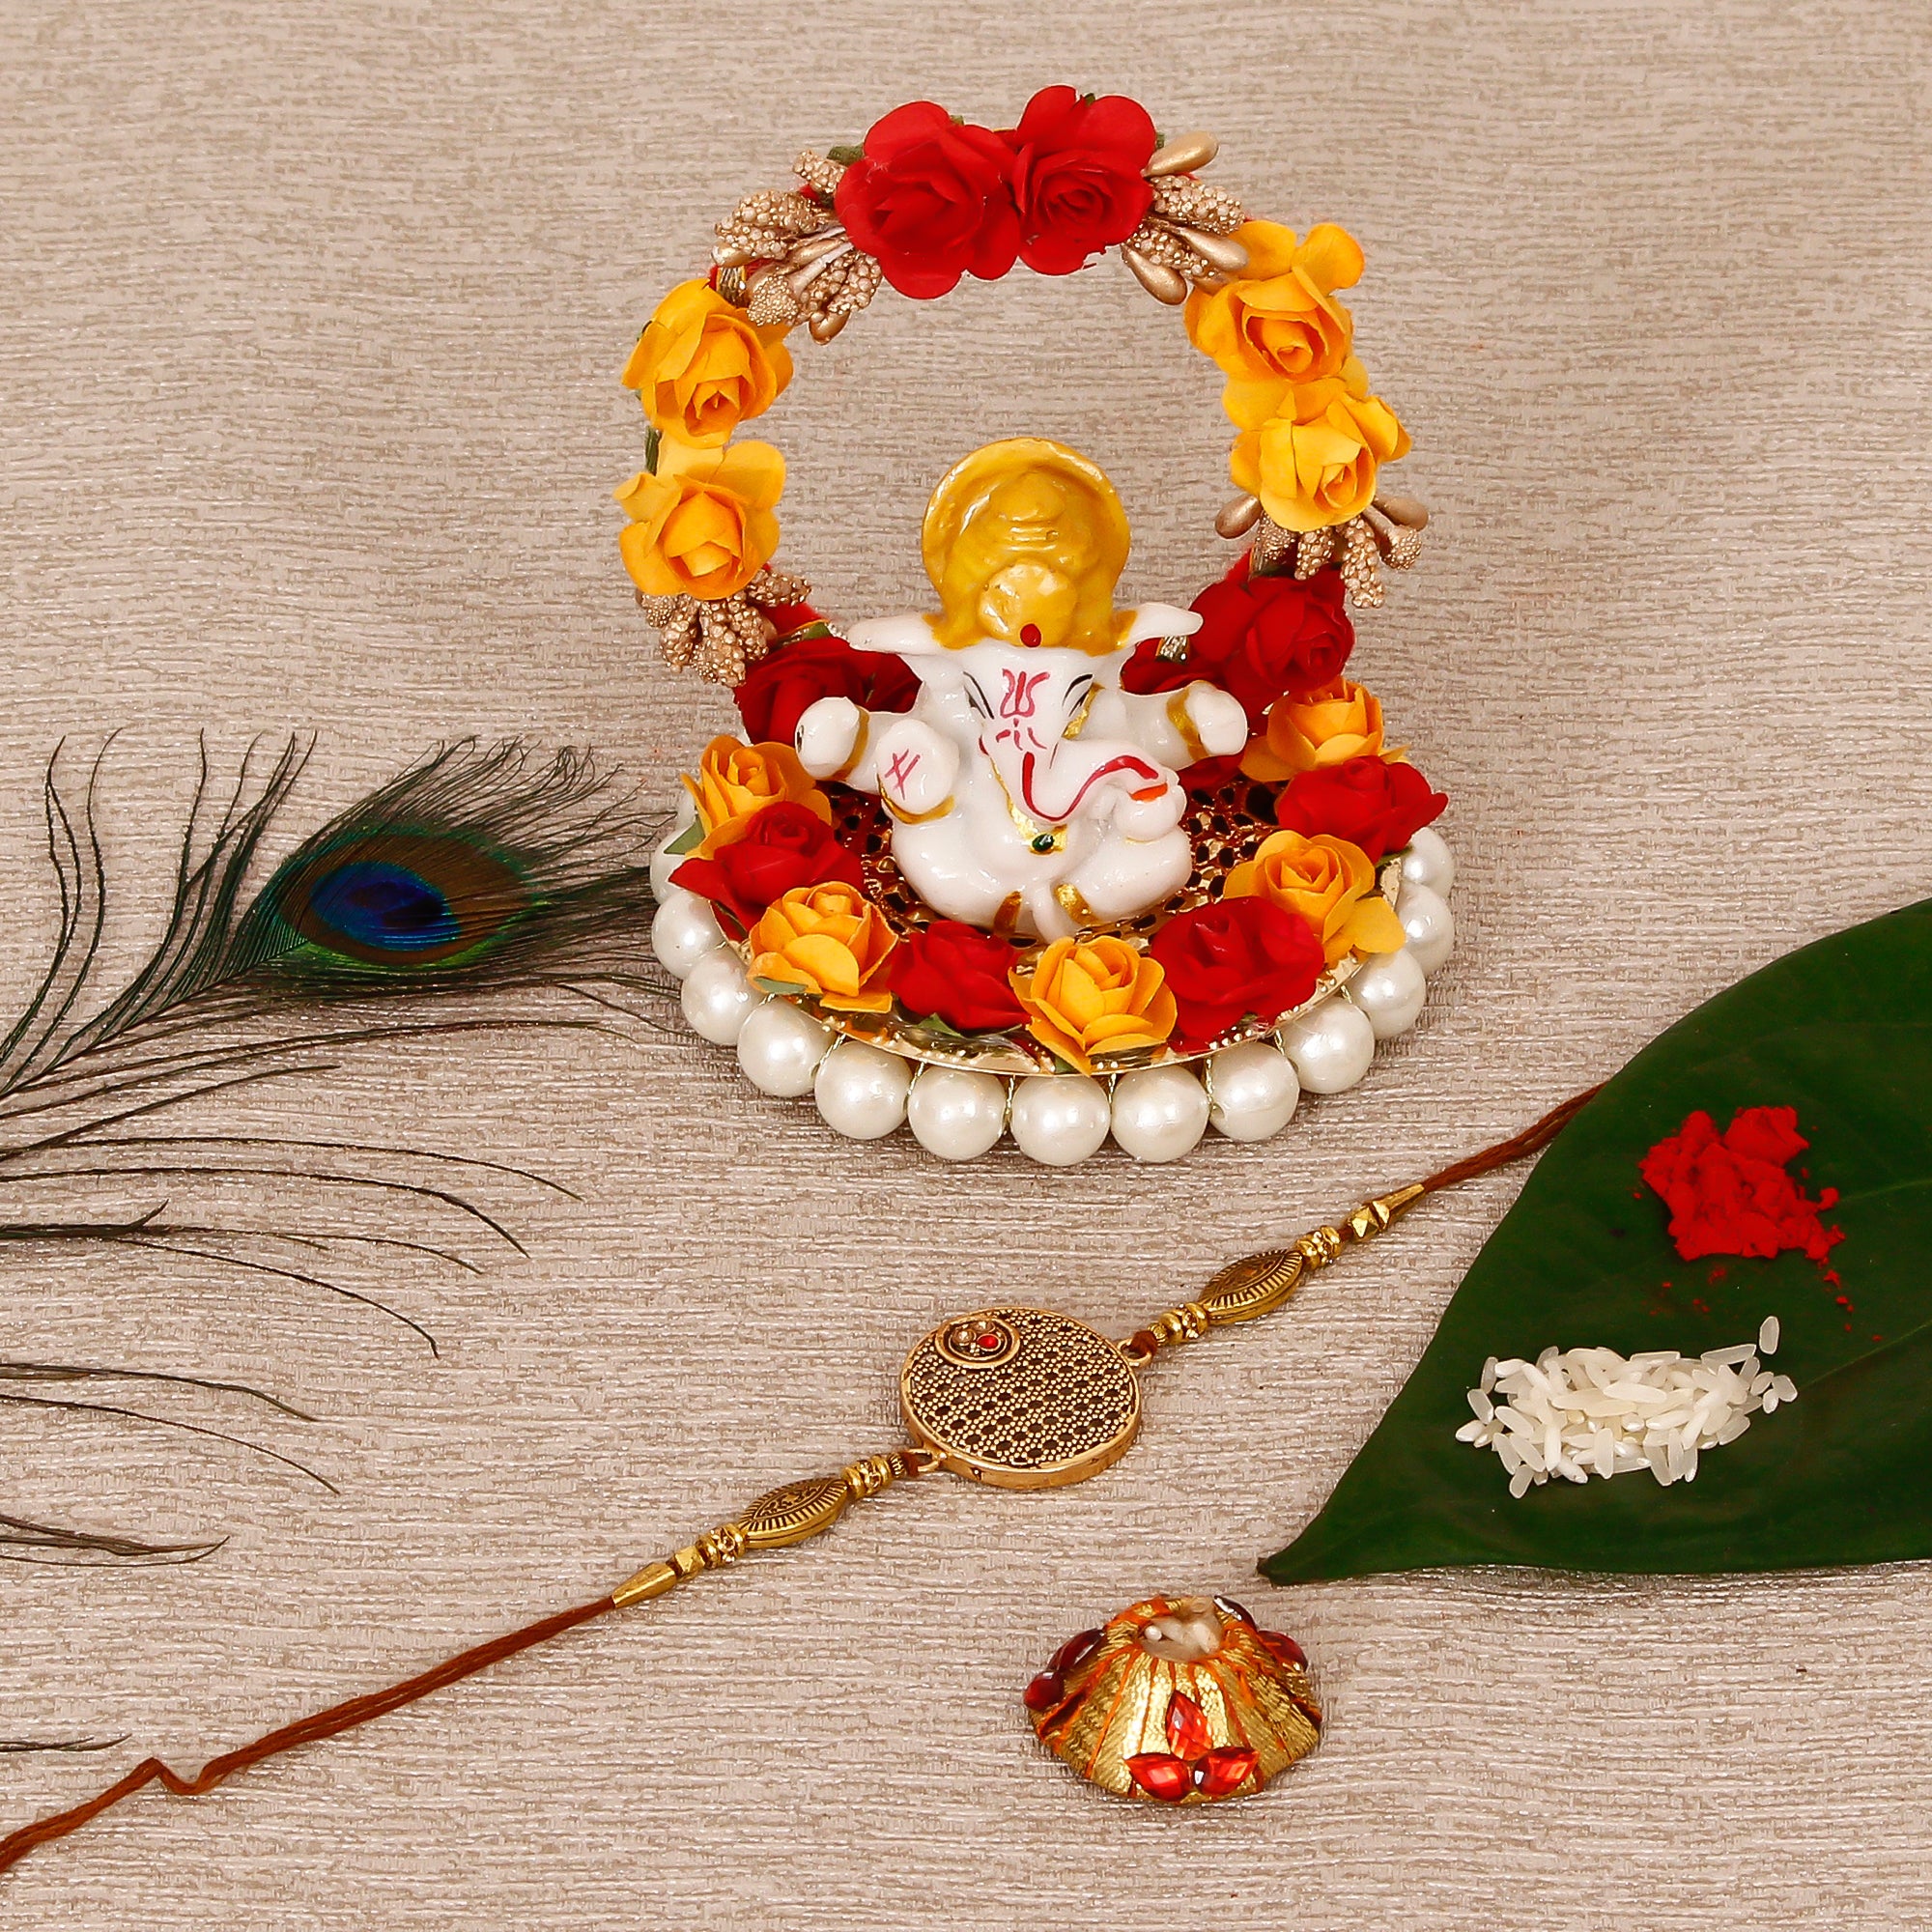 Designer Rakhi with Lord Ganesha Idol on Decorative Plate for Car & Home and Roli Tikka Matki